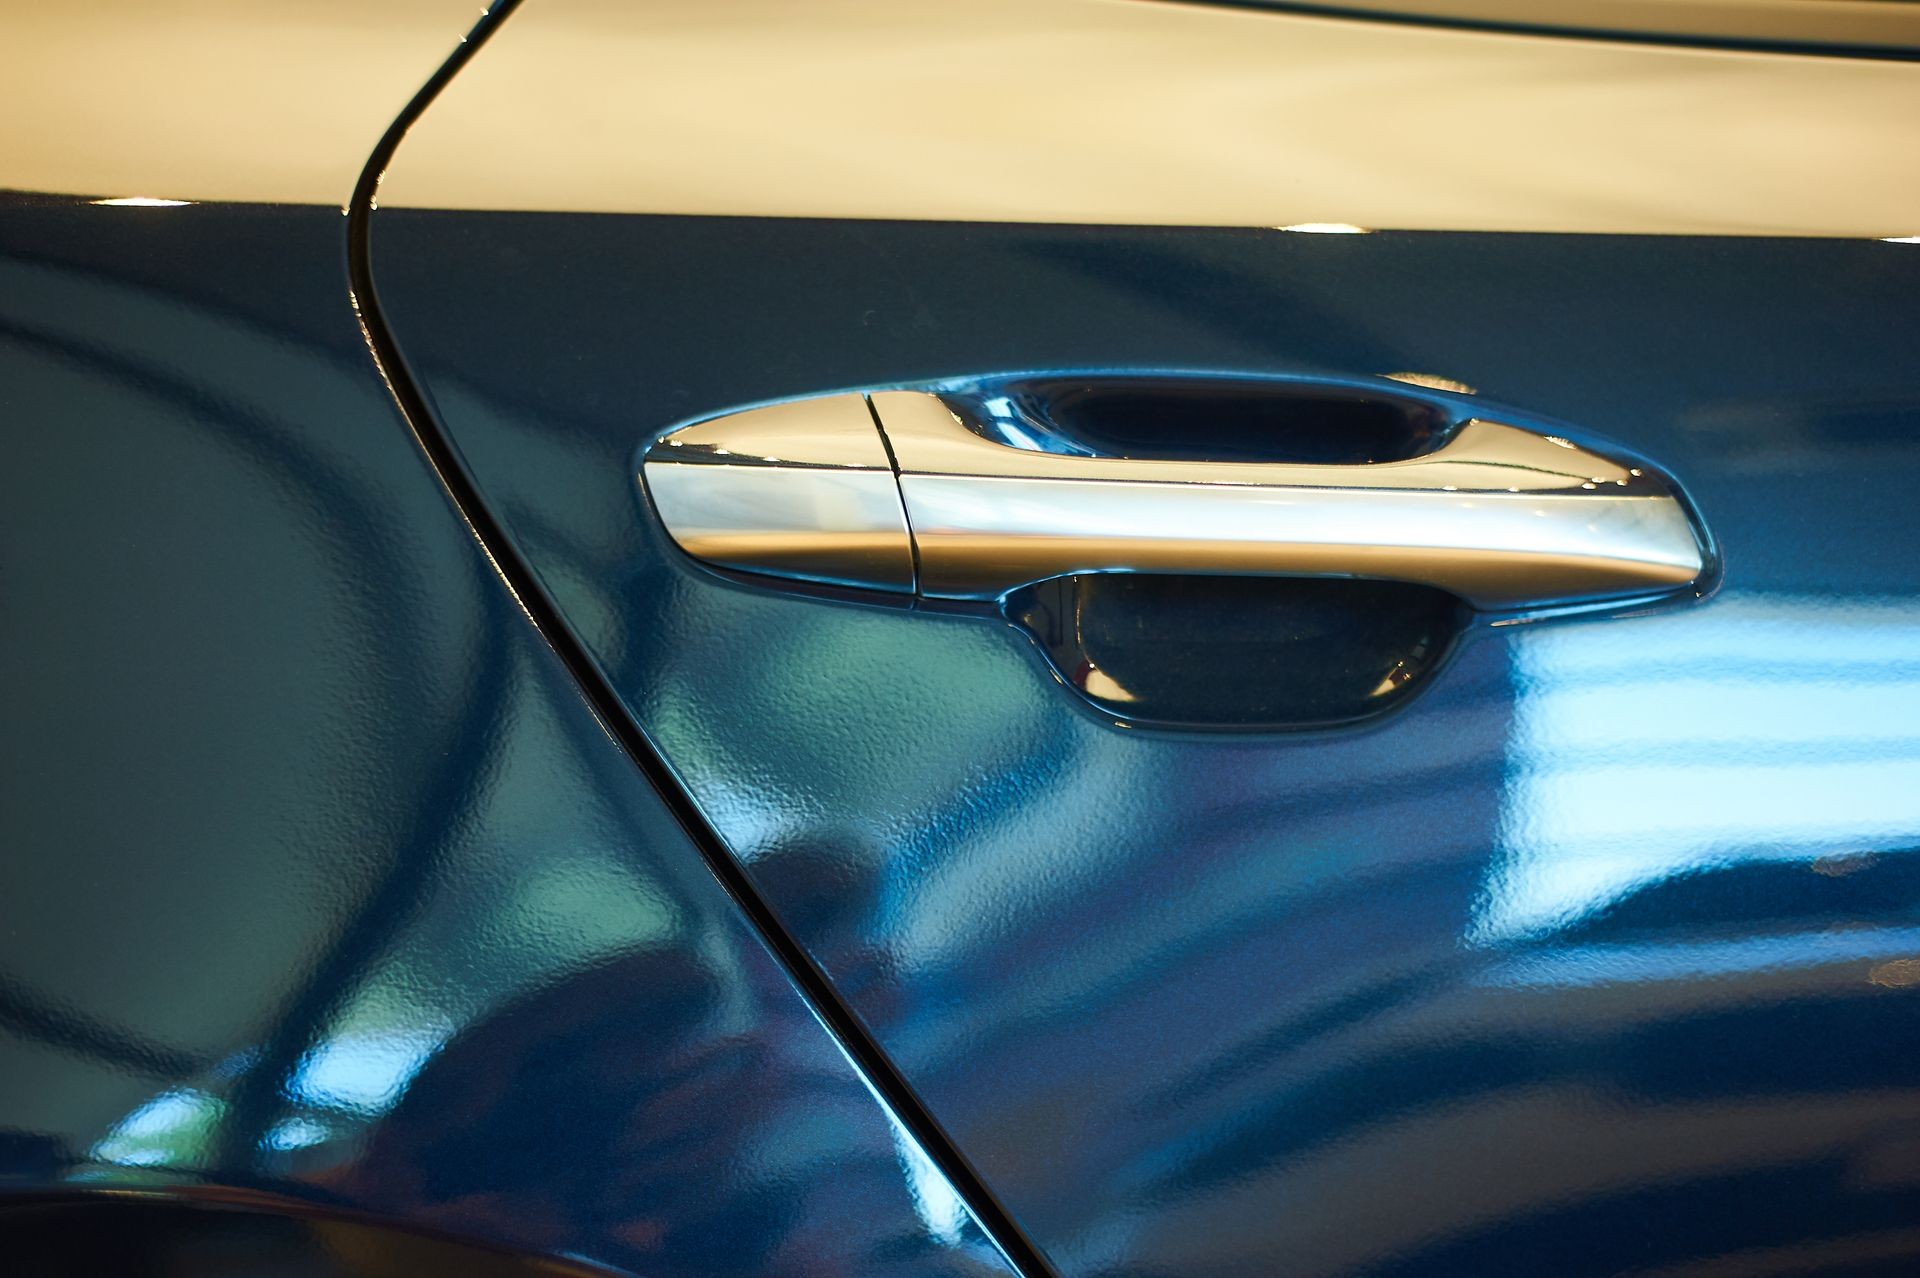 chrome metallic handle of new blue car closeup. auto car showroom